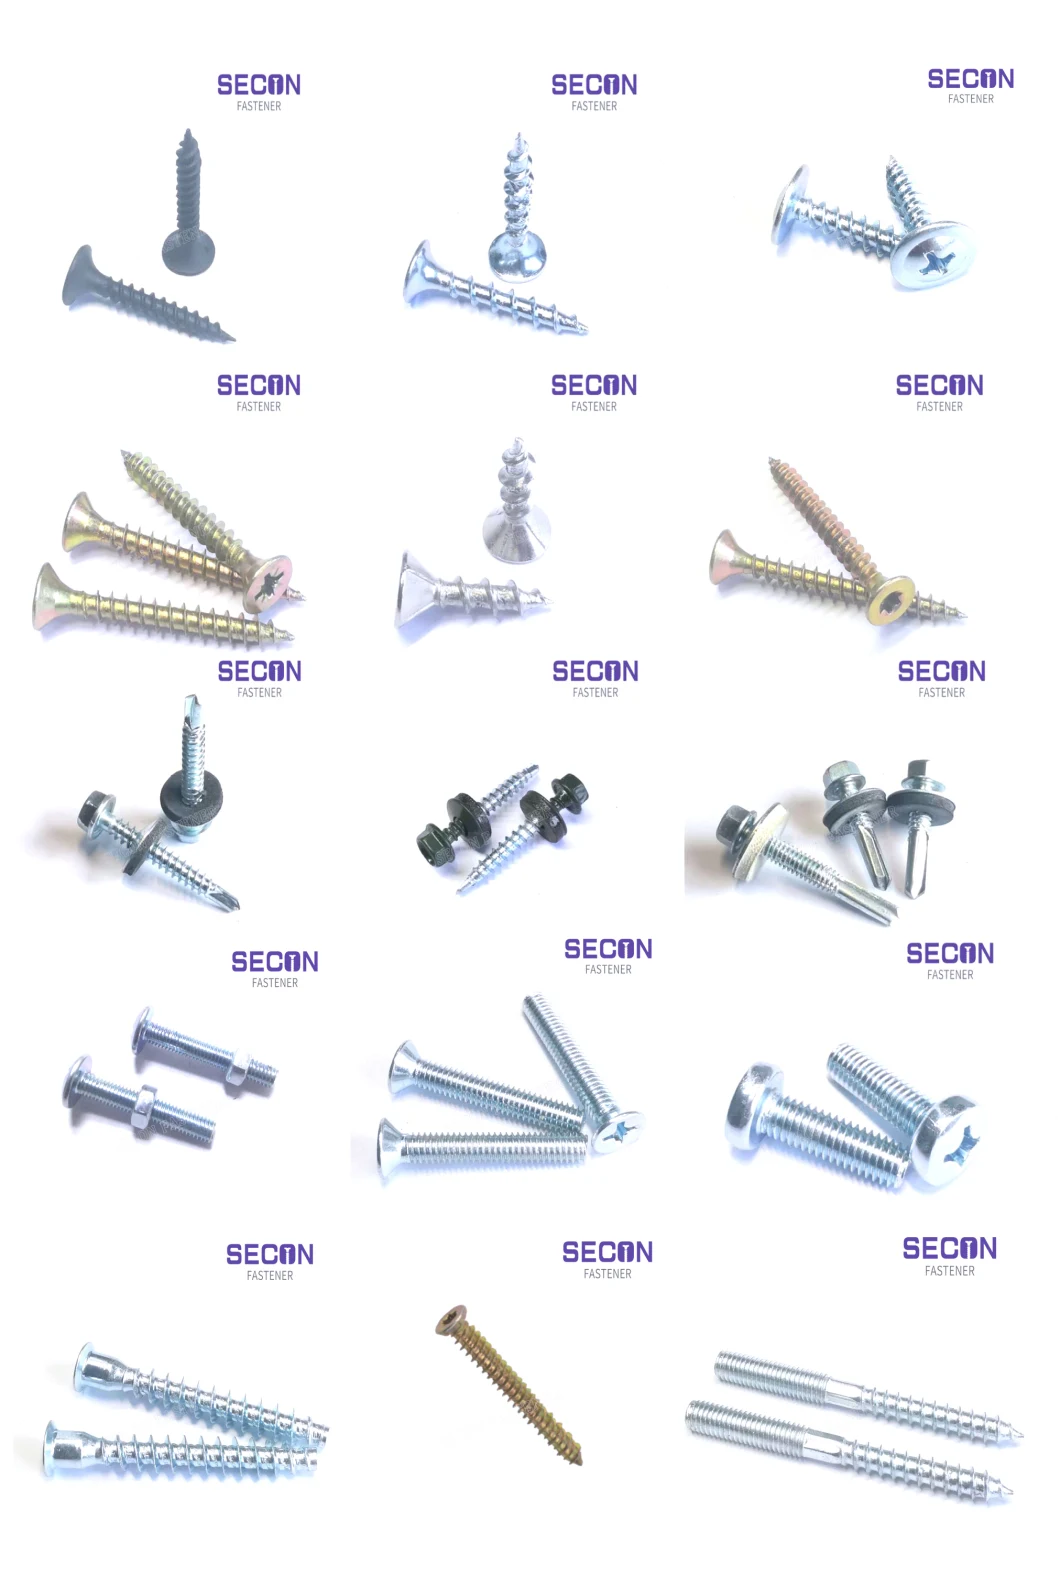 China Factory Supply DIN571 Wood Screw/Self Tapping Screw/Self Drilling Screw/Chipboard Screw/Wood Screw/Roofing Screw/Machine Screw/Tornillo